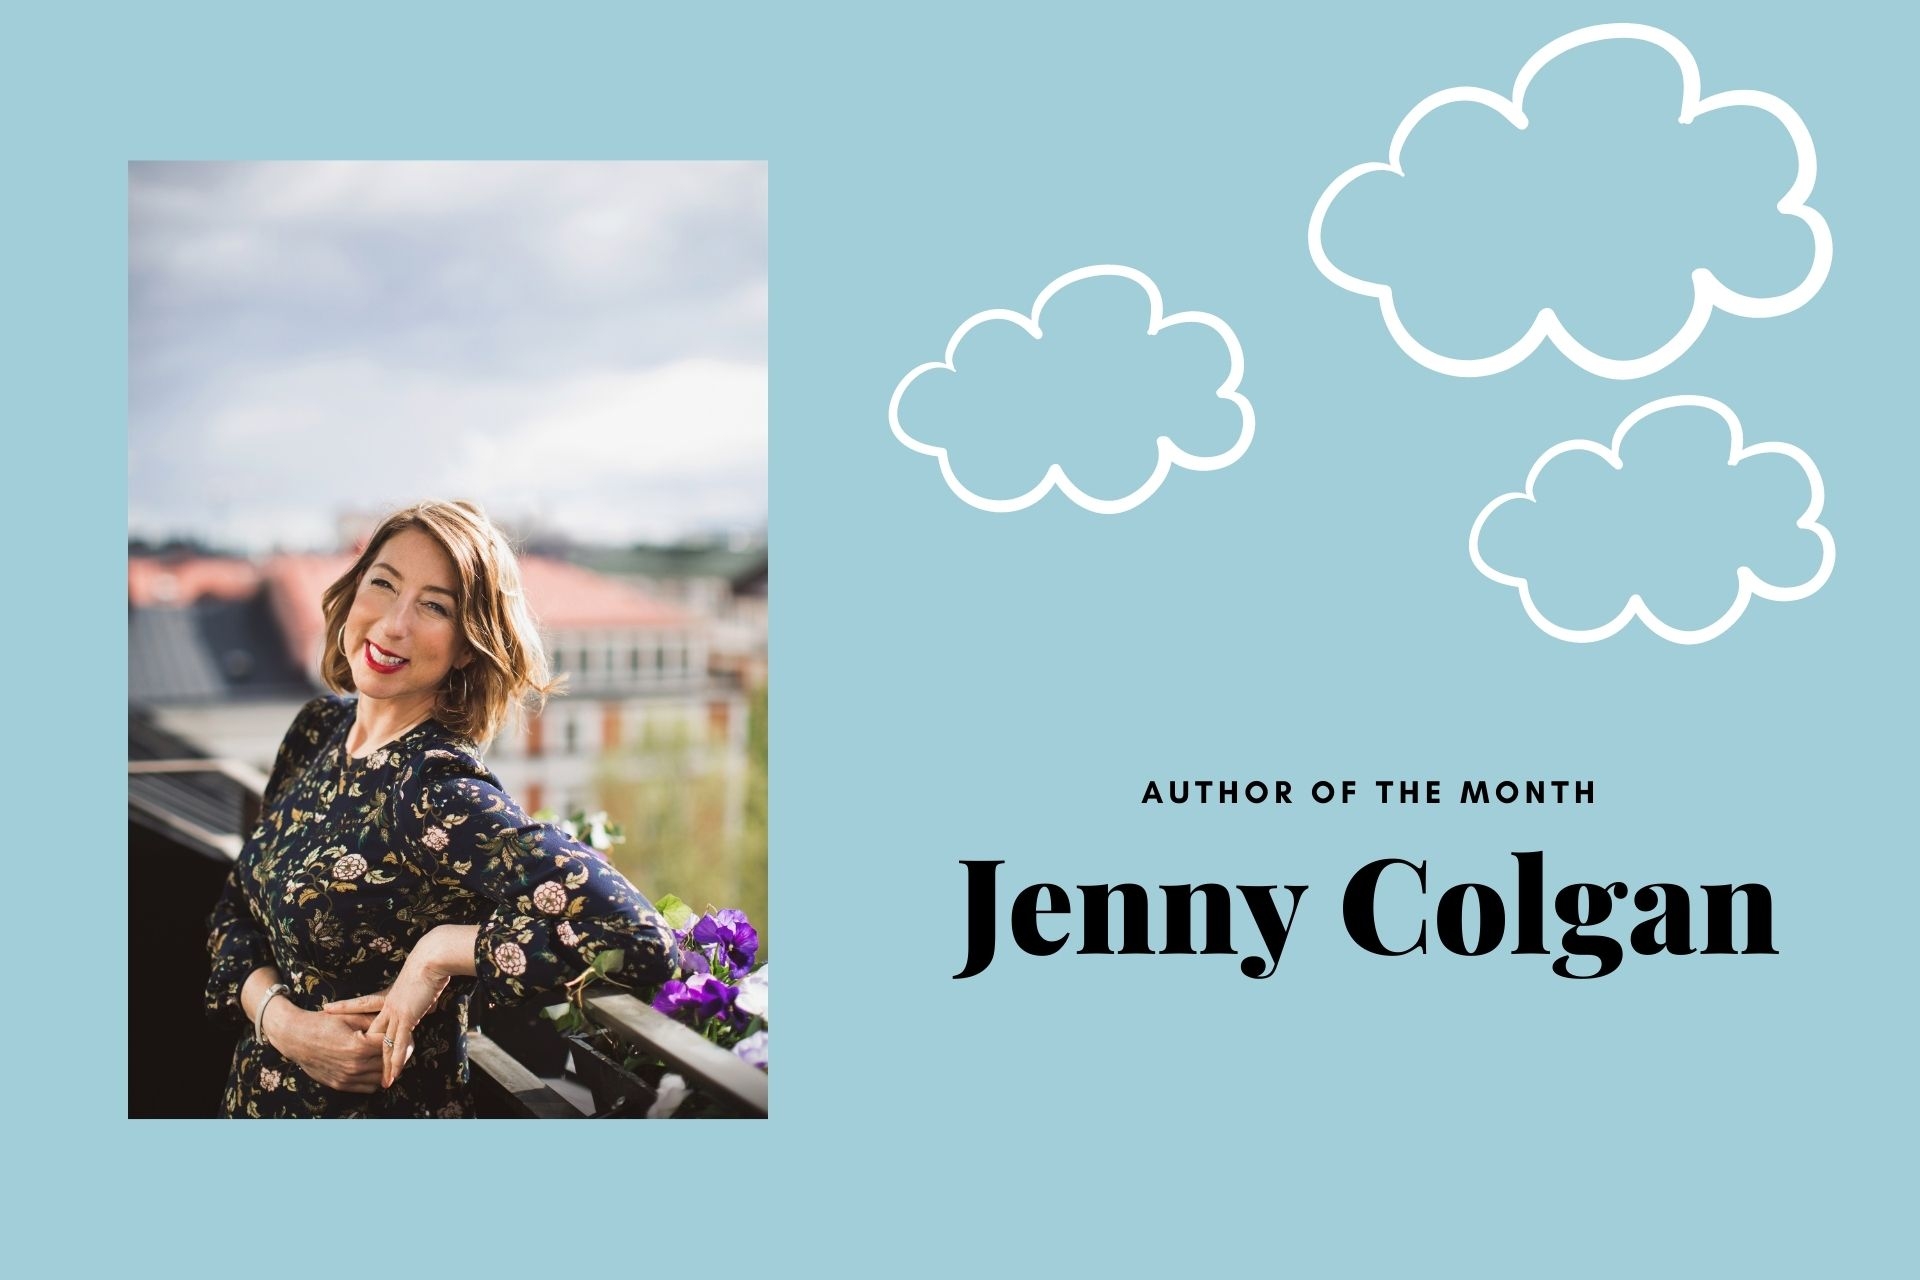 Author of the Month: Jenny Colgan